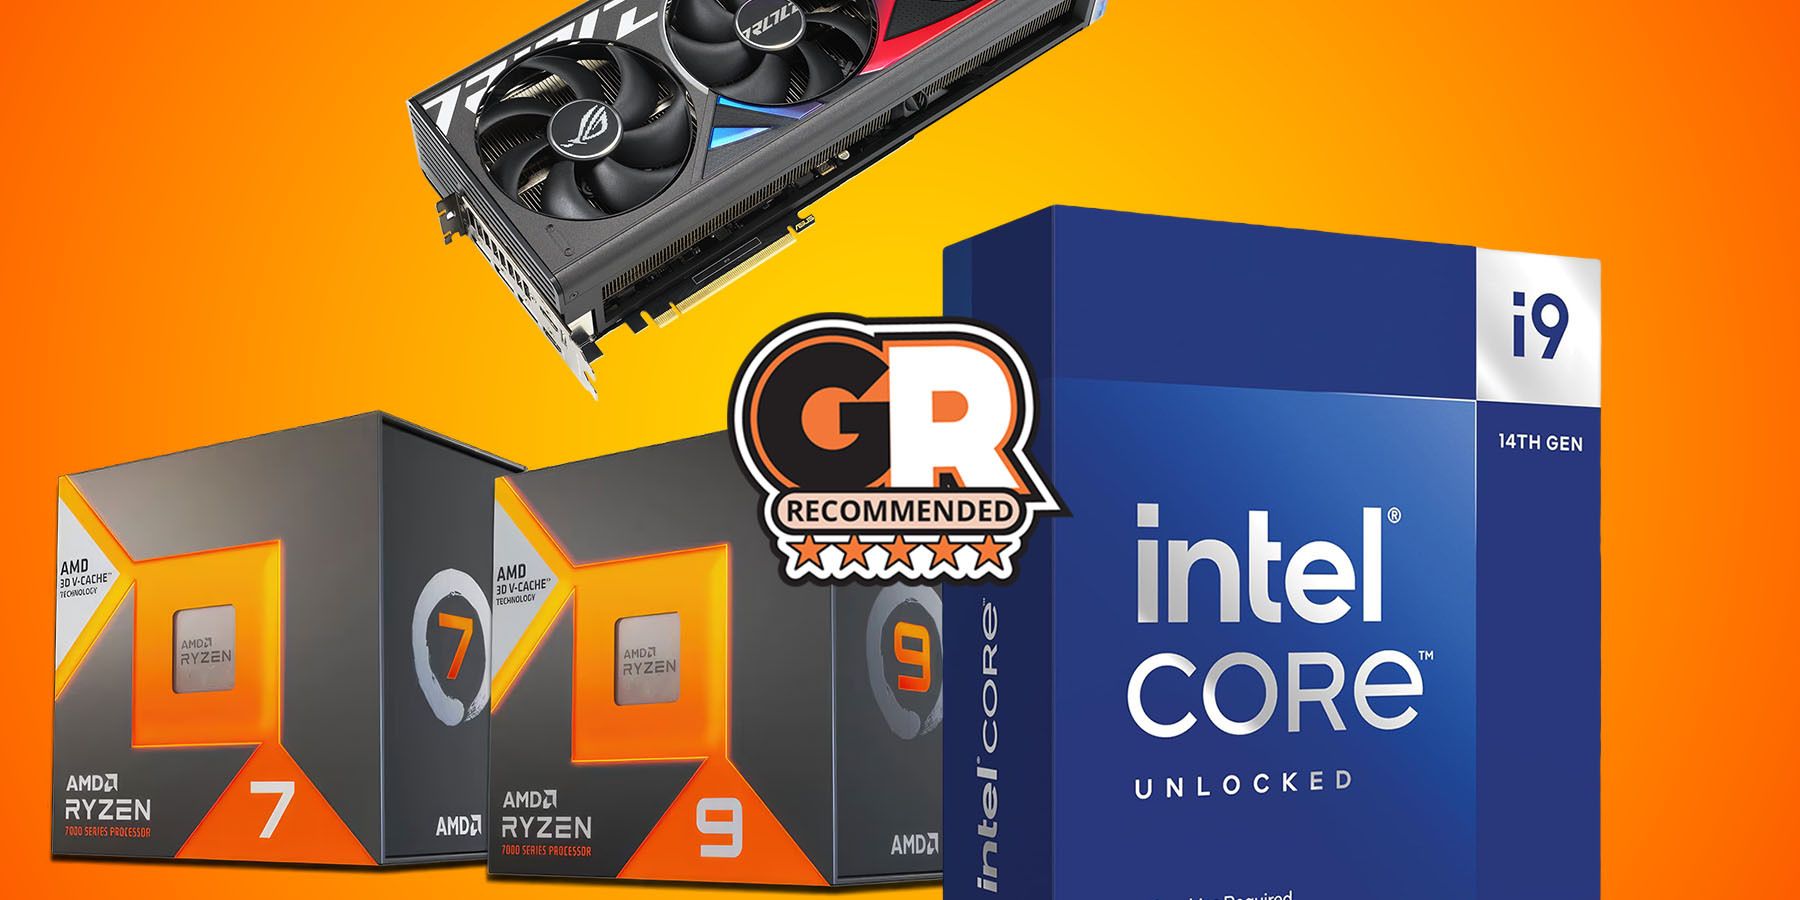 Intel® Core™ i7-14700K New Gaming Desktop Processor 20 cores (8 P-cores +  12 E-cores) with Integrated Graphics - Unlocked